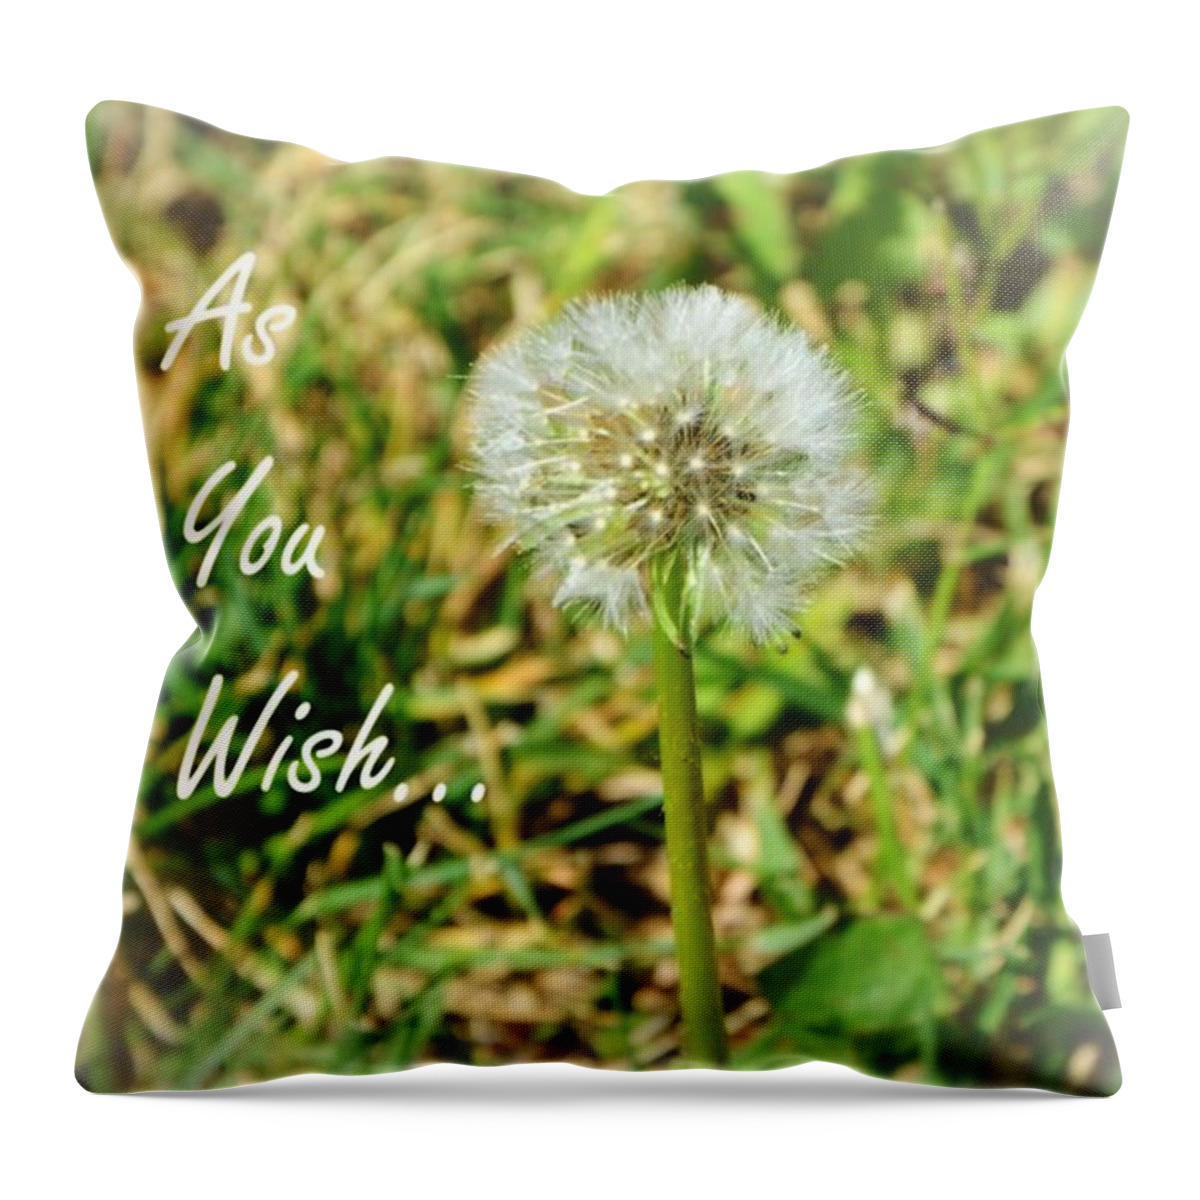 Dandelion Wish Throw Pillow featuring the photograph As You Wish... by Marilyn MacCrakin